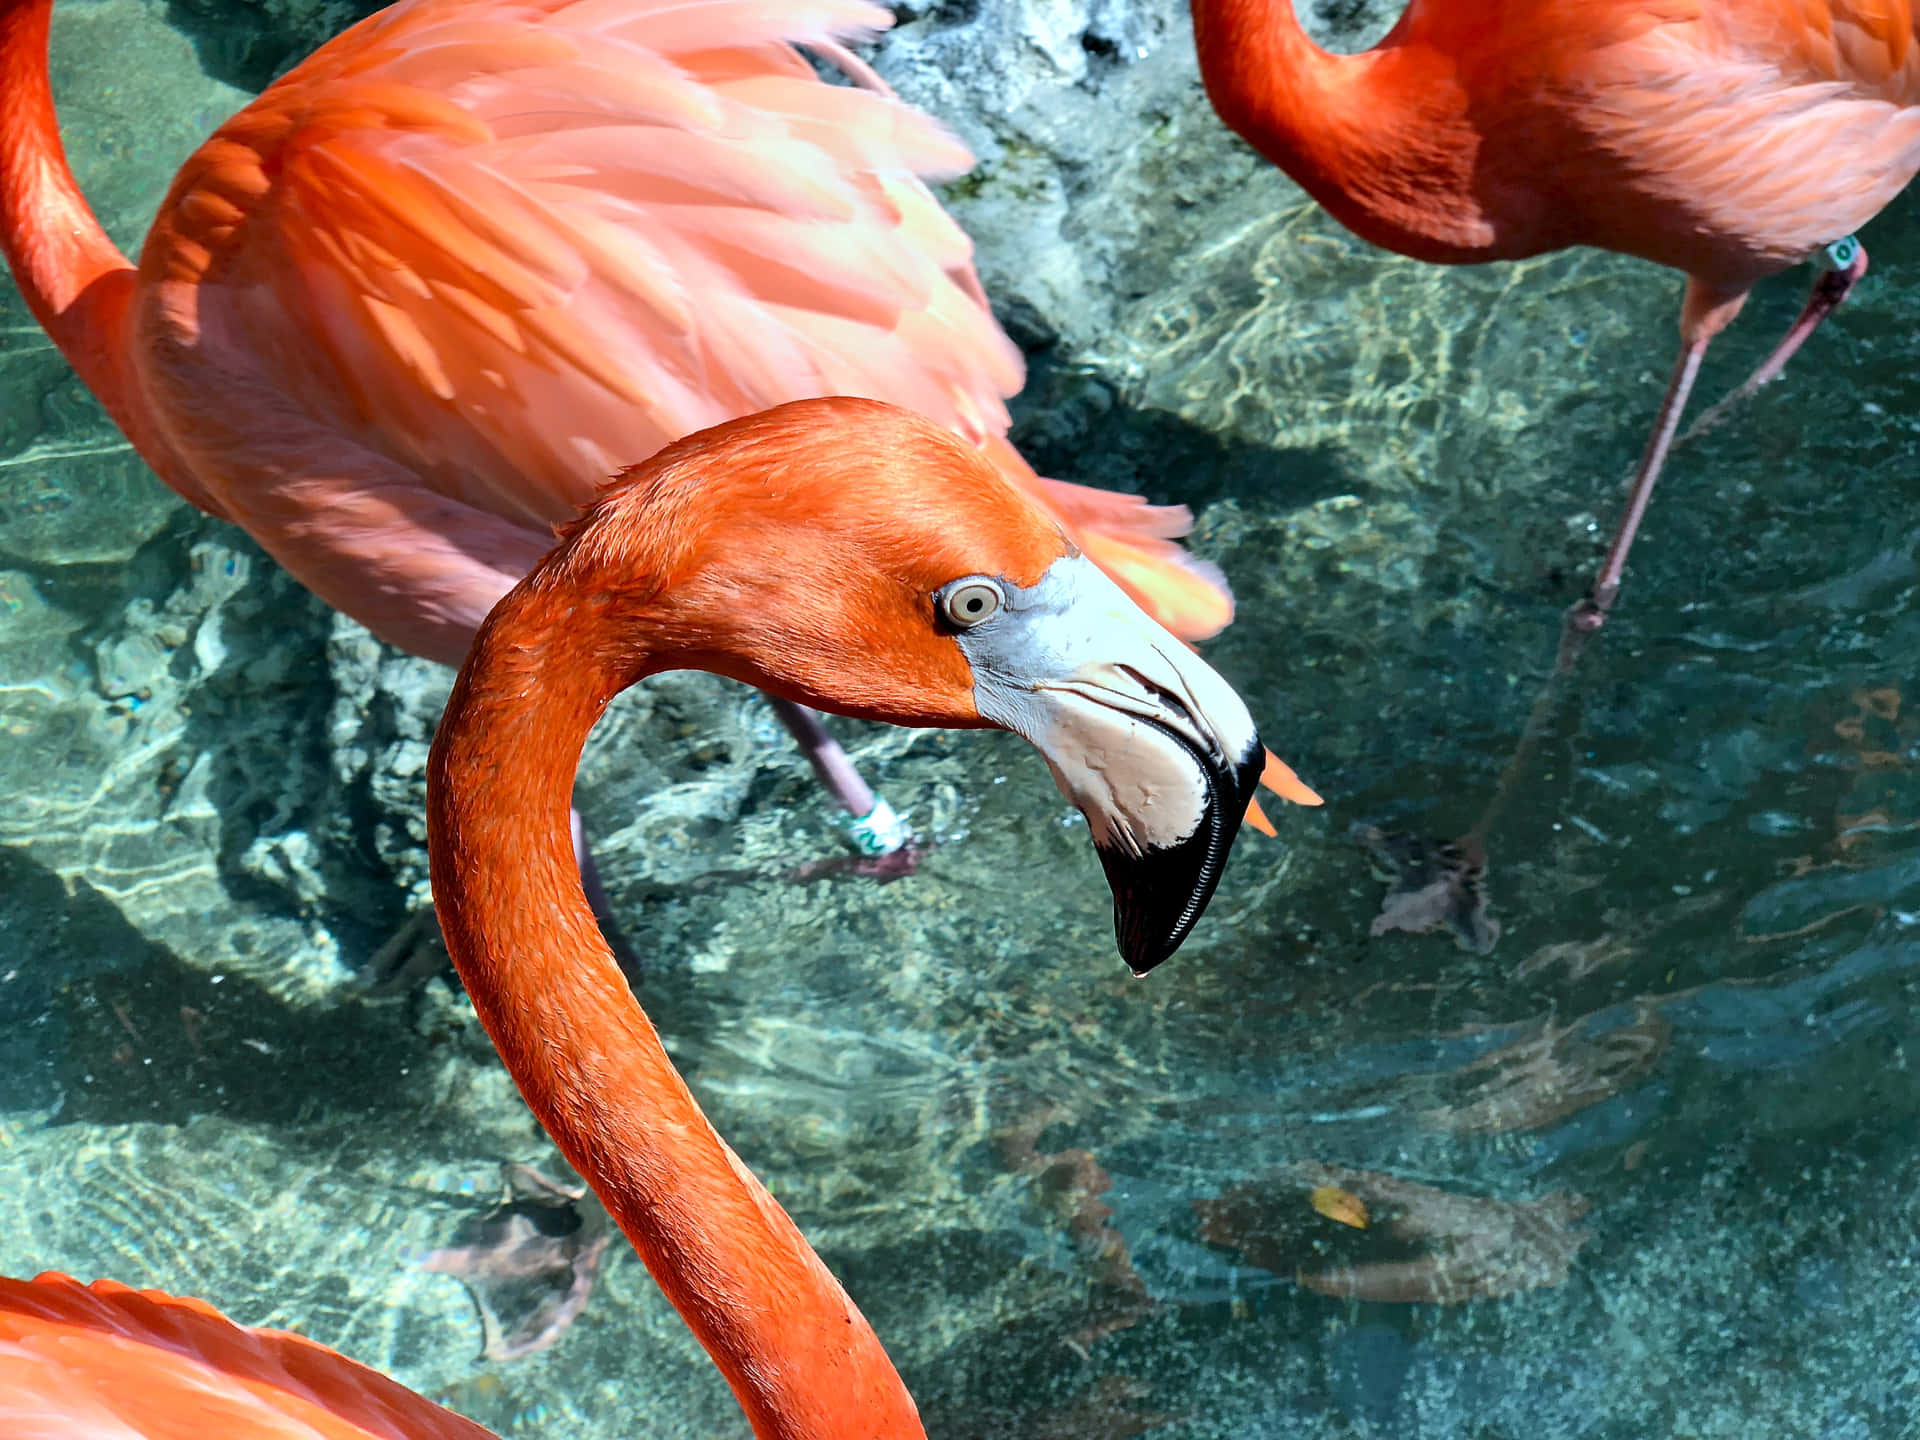 Ståut Med En Flamingo-bakgrund Or Utmärk Dig Med En Flamingo-bakgrund